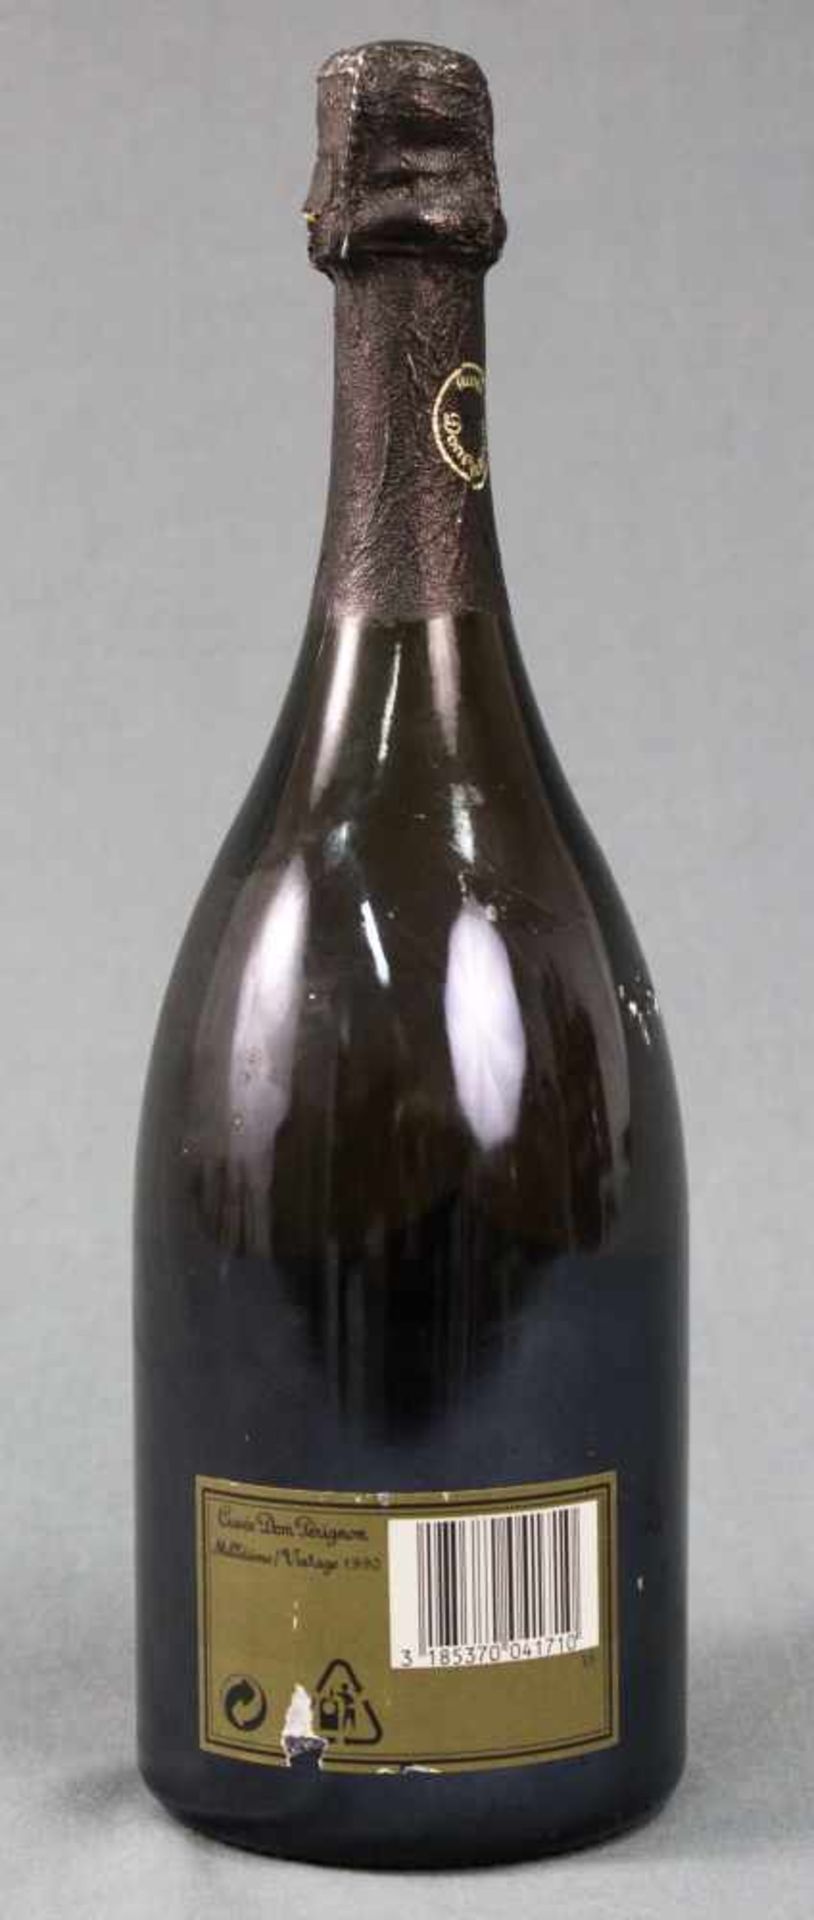 1990 Champagne. Cuvee Dom Perignon. Vintage.Moet et Chandon a Epernay. Fondee en 1743. Eine ganze - Bild 2 aus 8